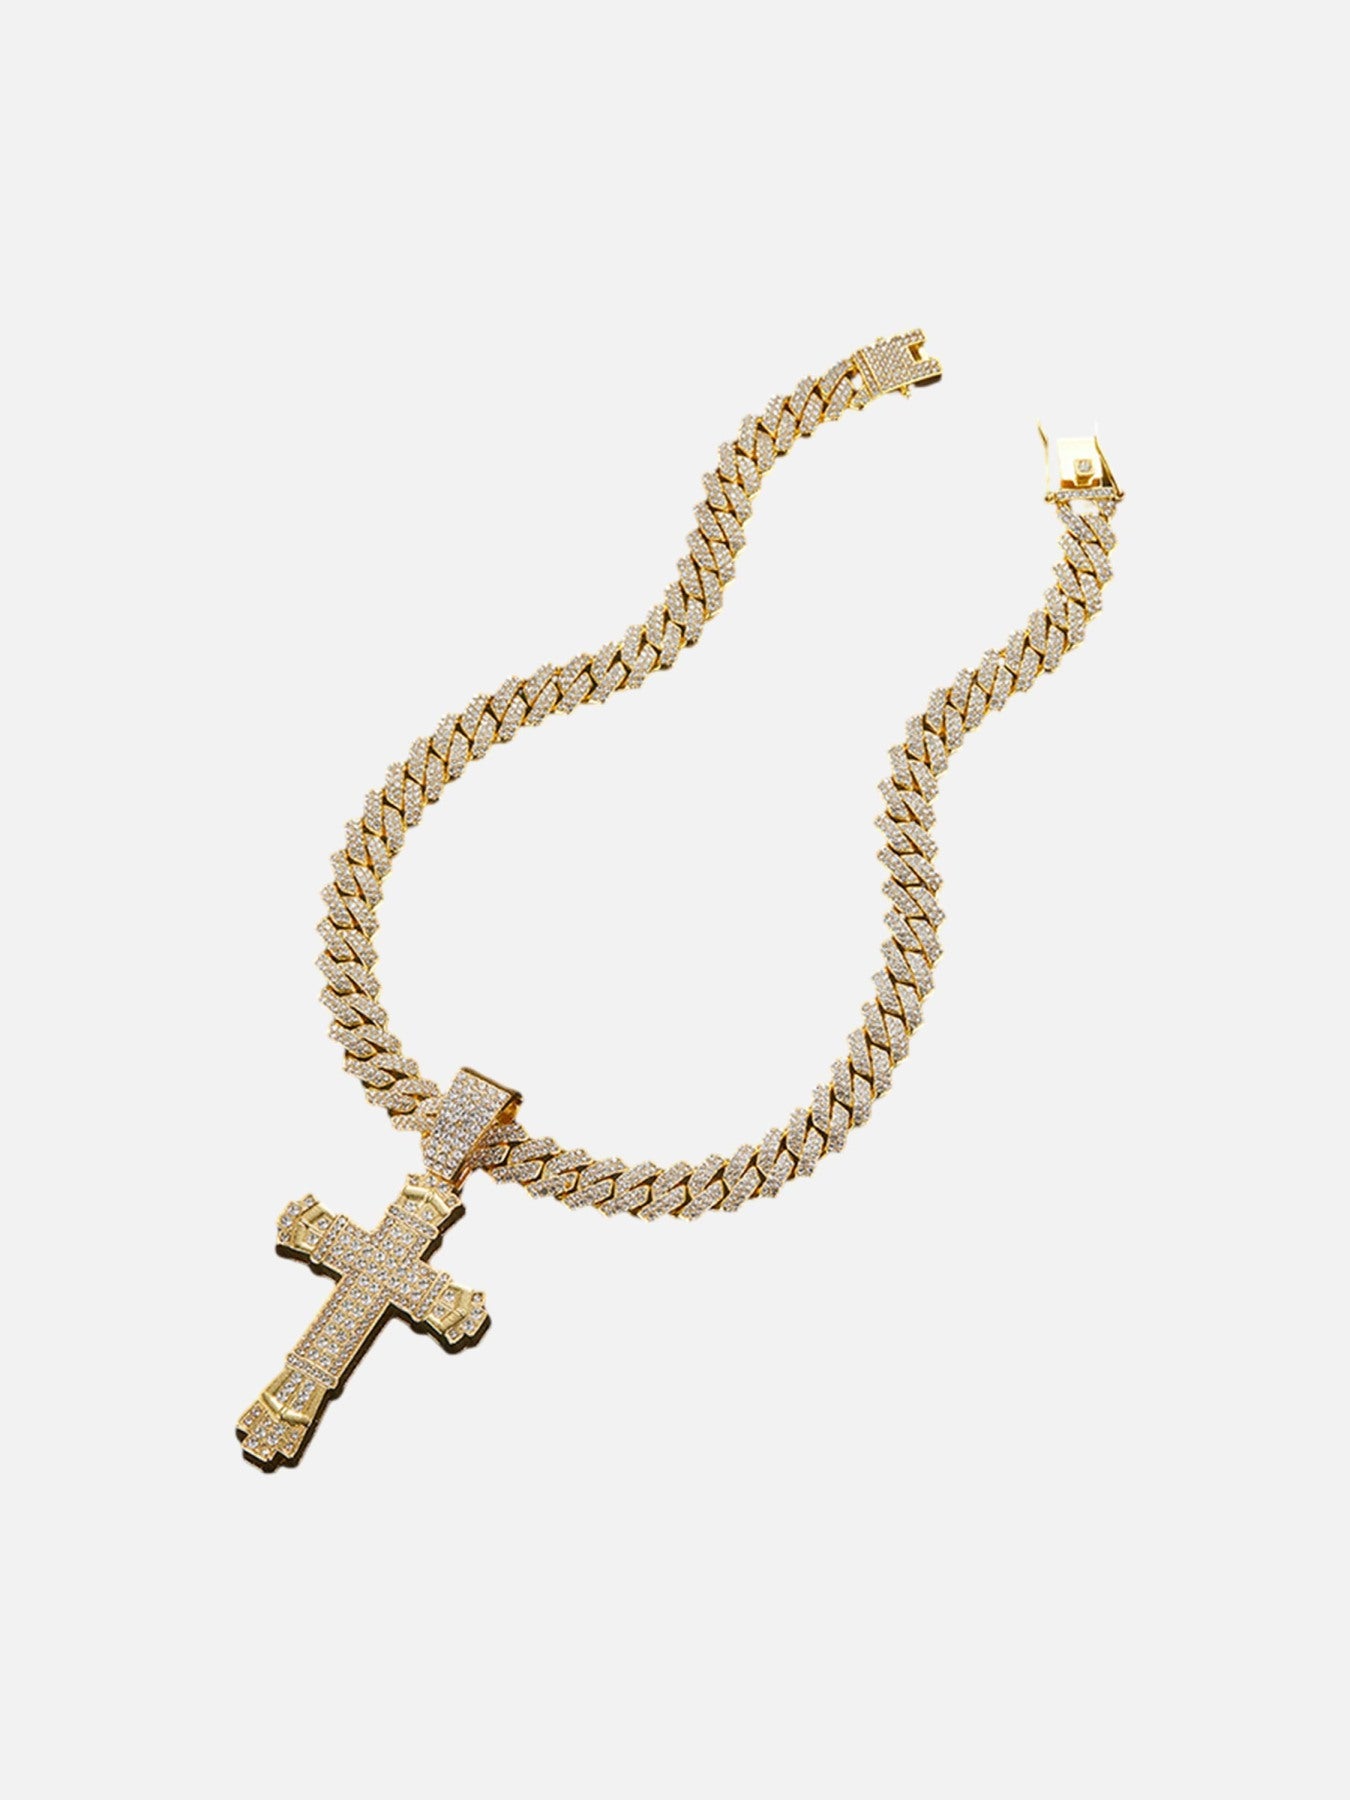 Thesupermade Diamond Large Cross Necklace - 1970